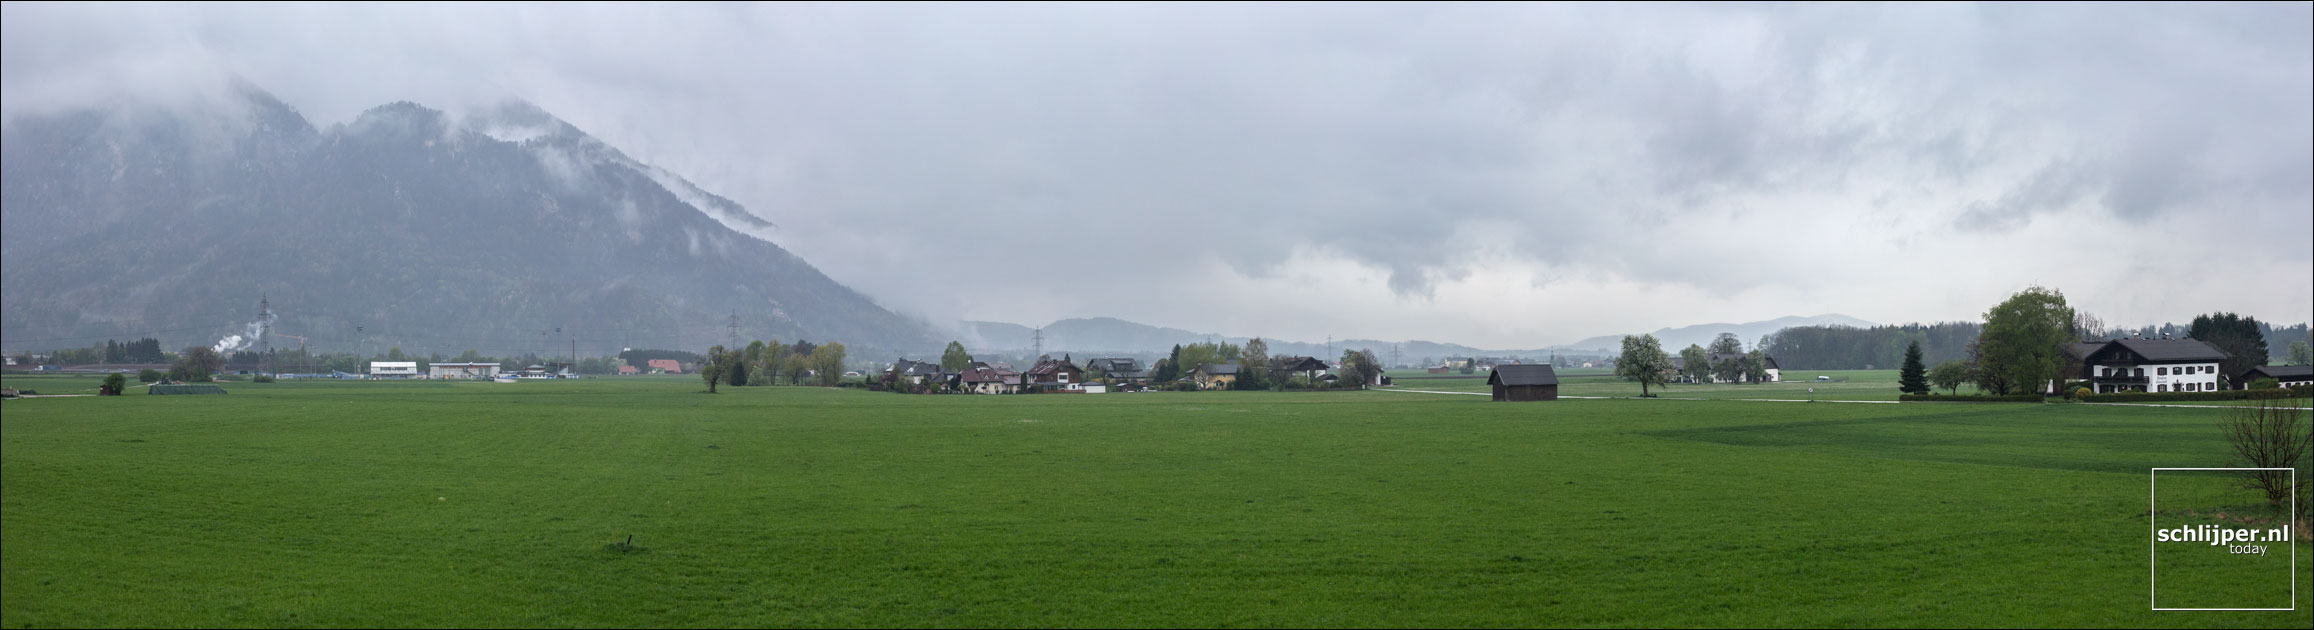 Oostenrijk, Anif, 10 april 2014